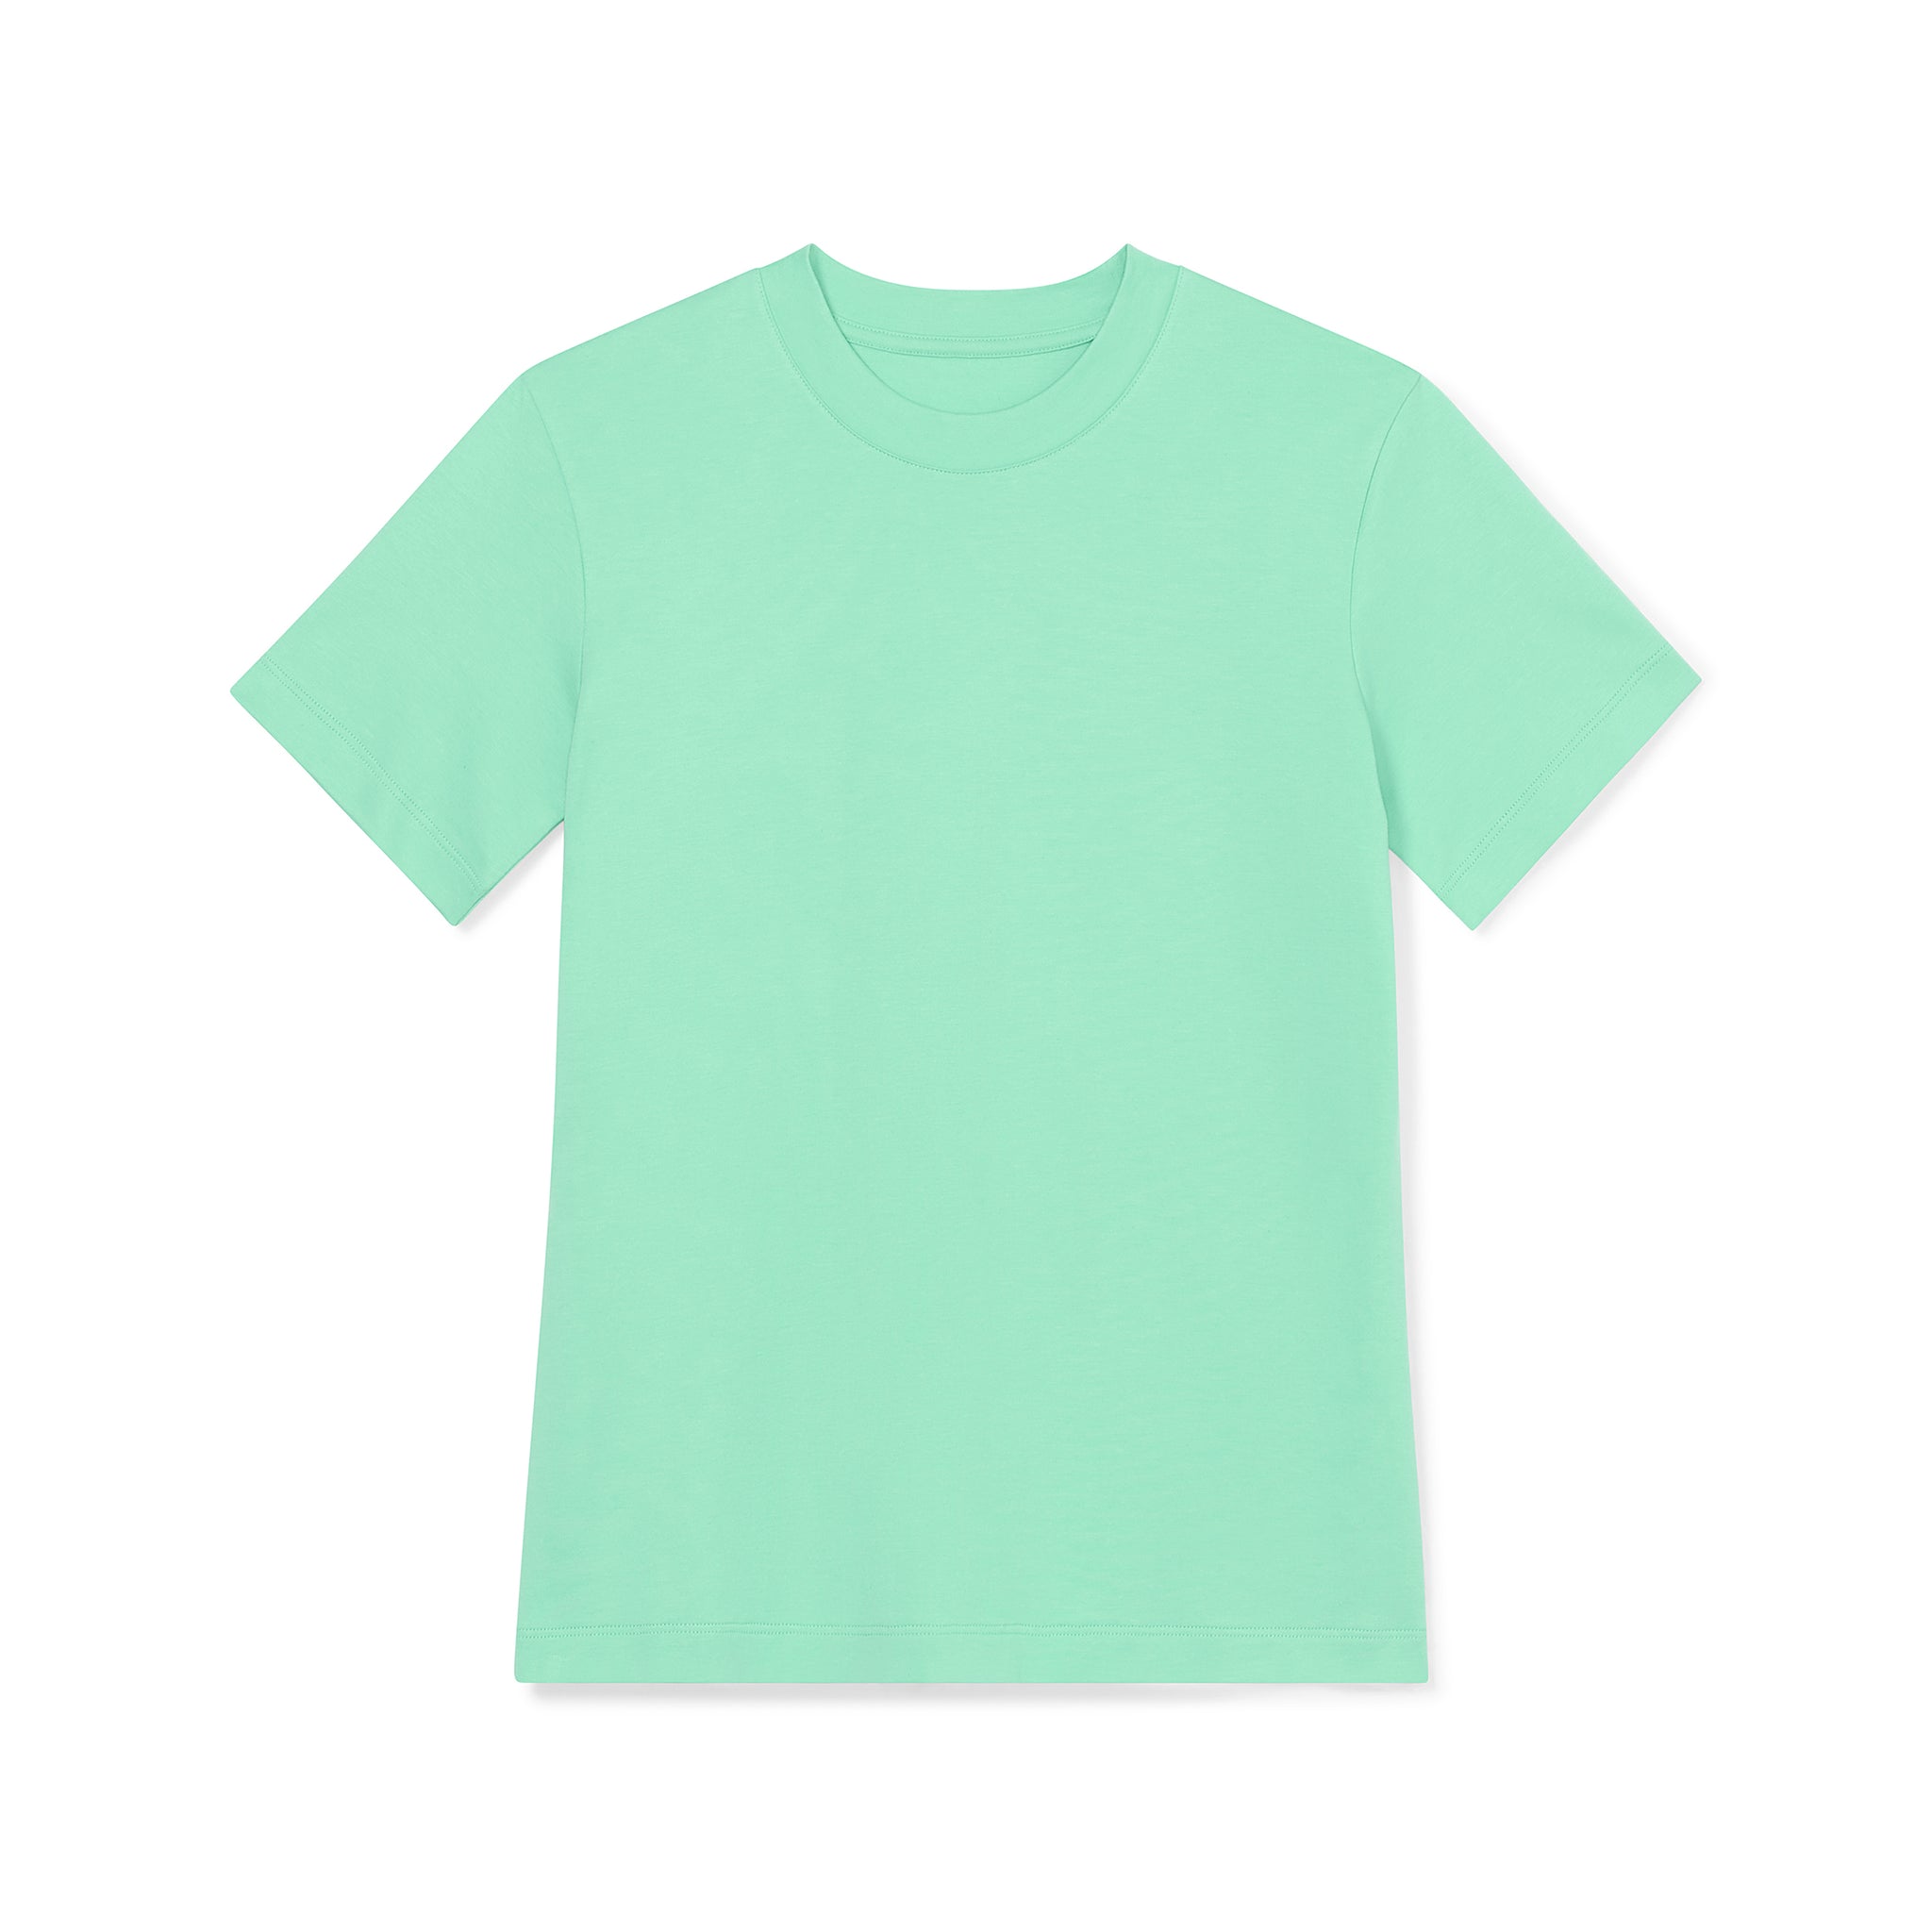 packshot image of  the New York Liberty Leslie T-Shirt in Seafoam